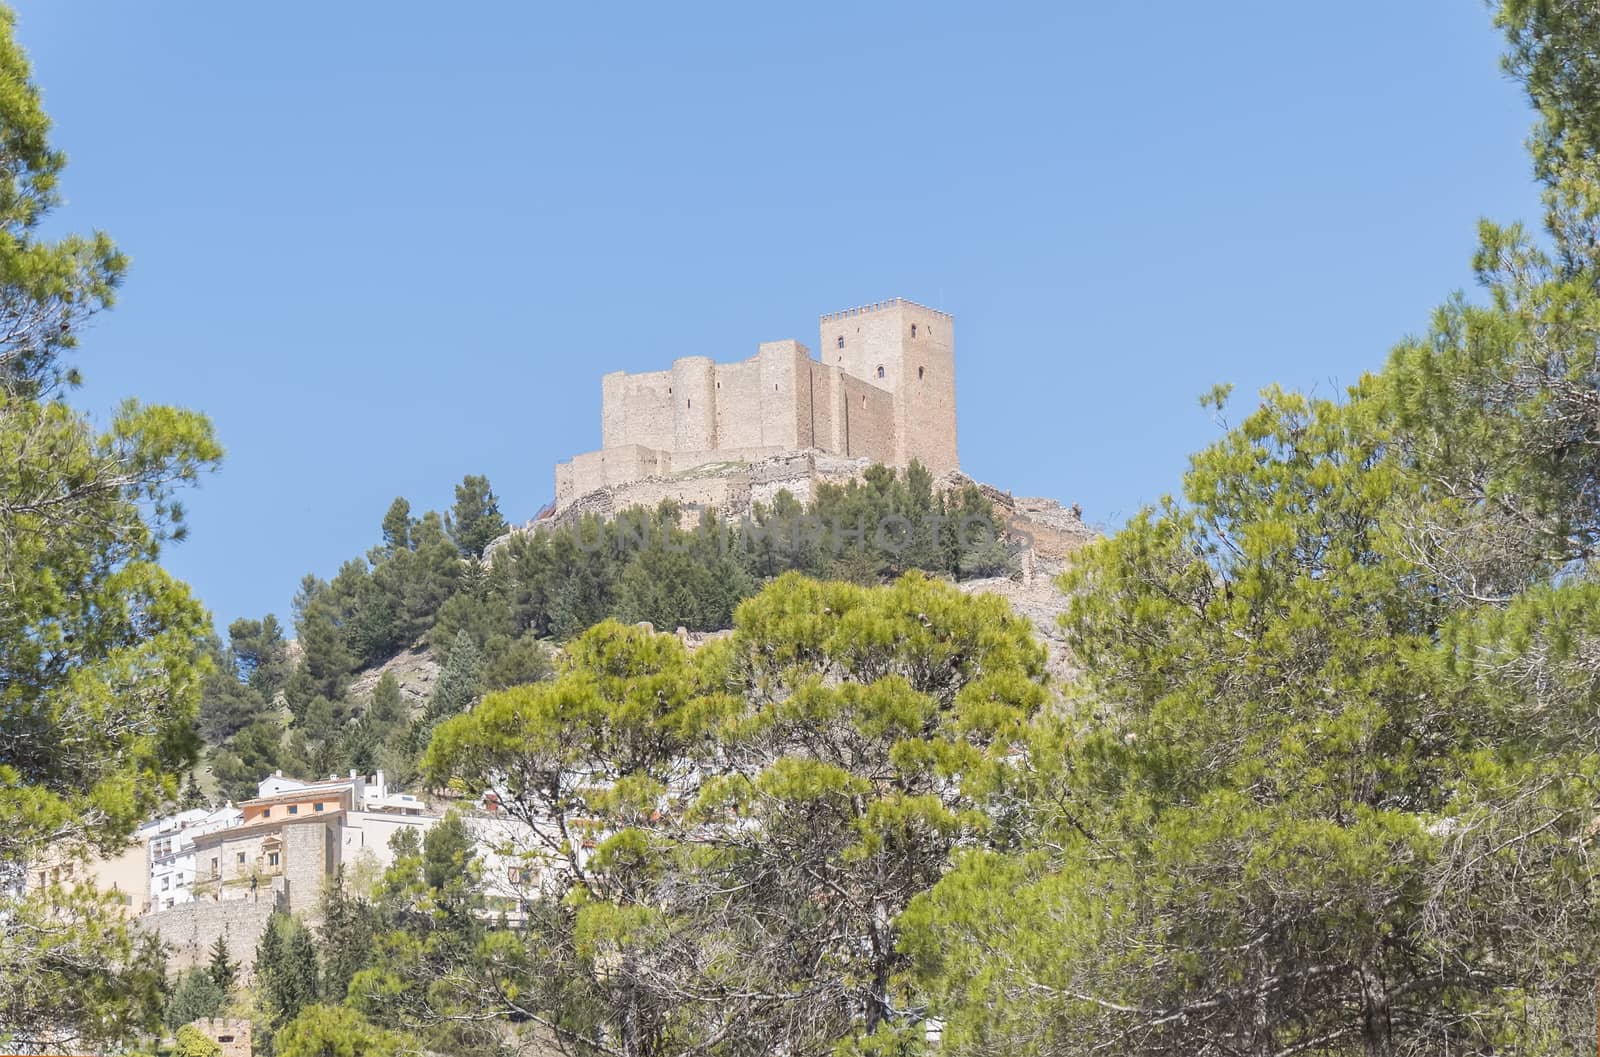 Segura de la Sierra castle, Jaen, Spain